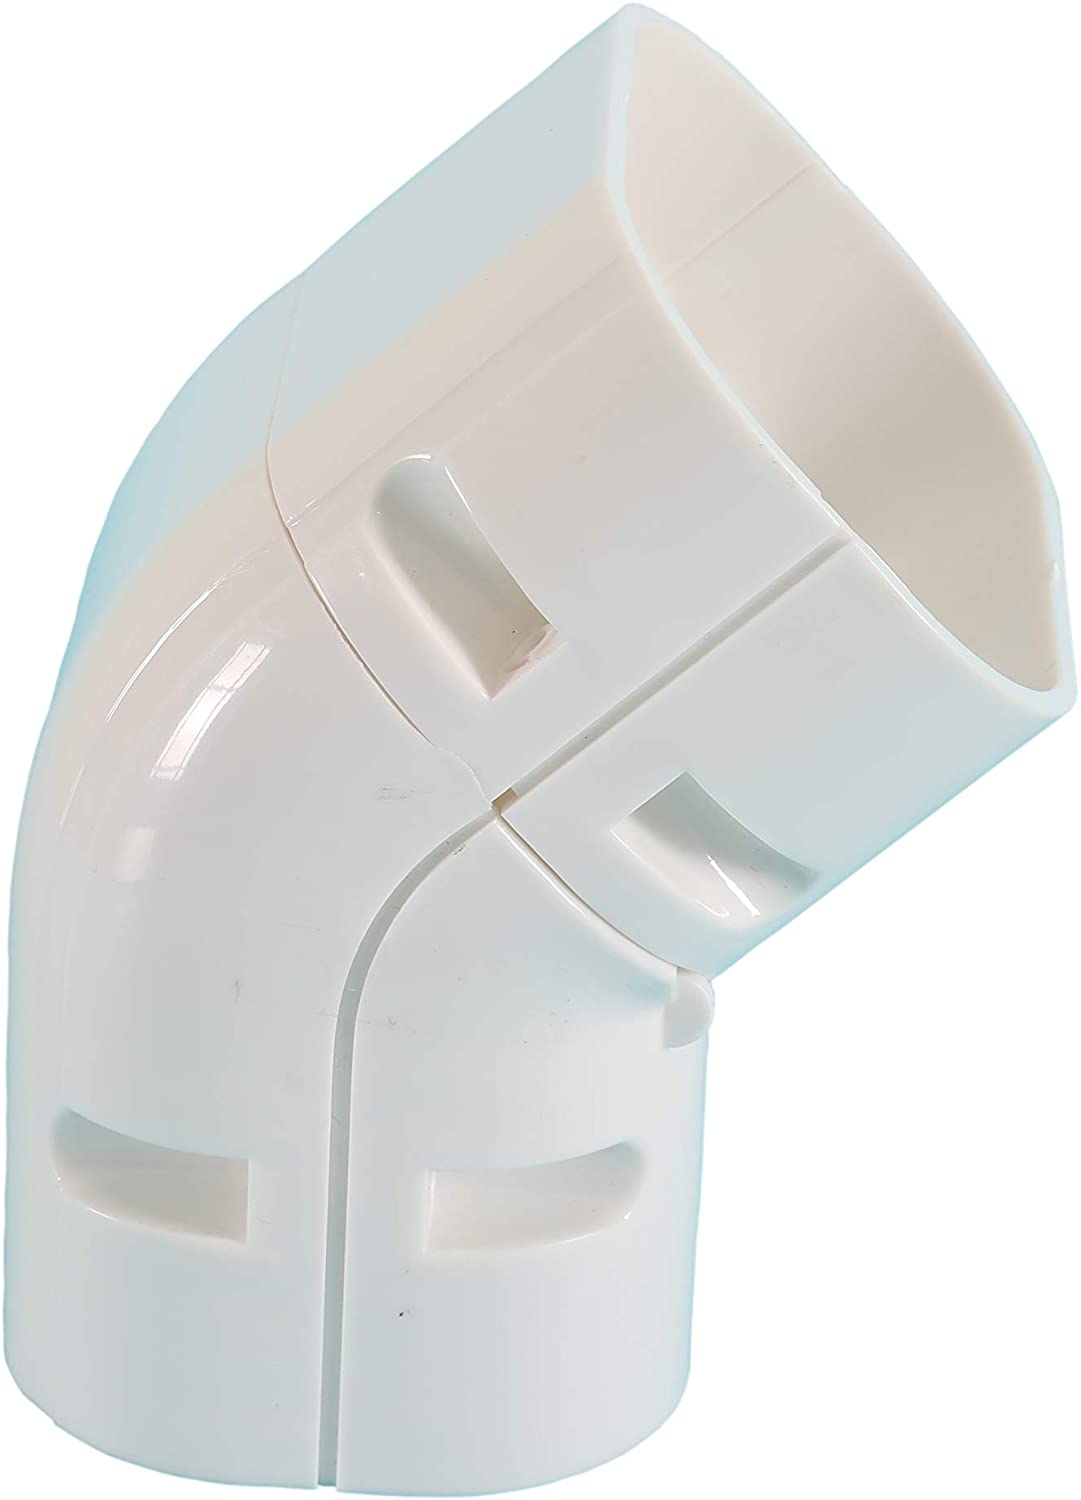 HVAC Premium ABS Plastic Decorative Line Set Cover Universal Set for Ductless Mini Split Air Conditioners - Pipe Cover